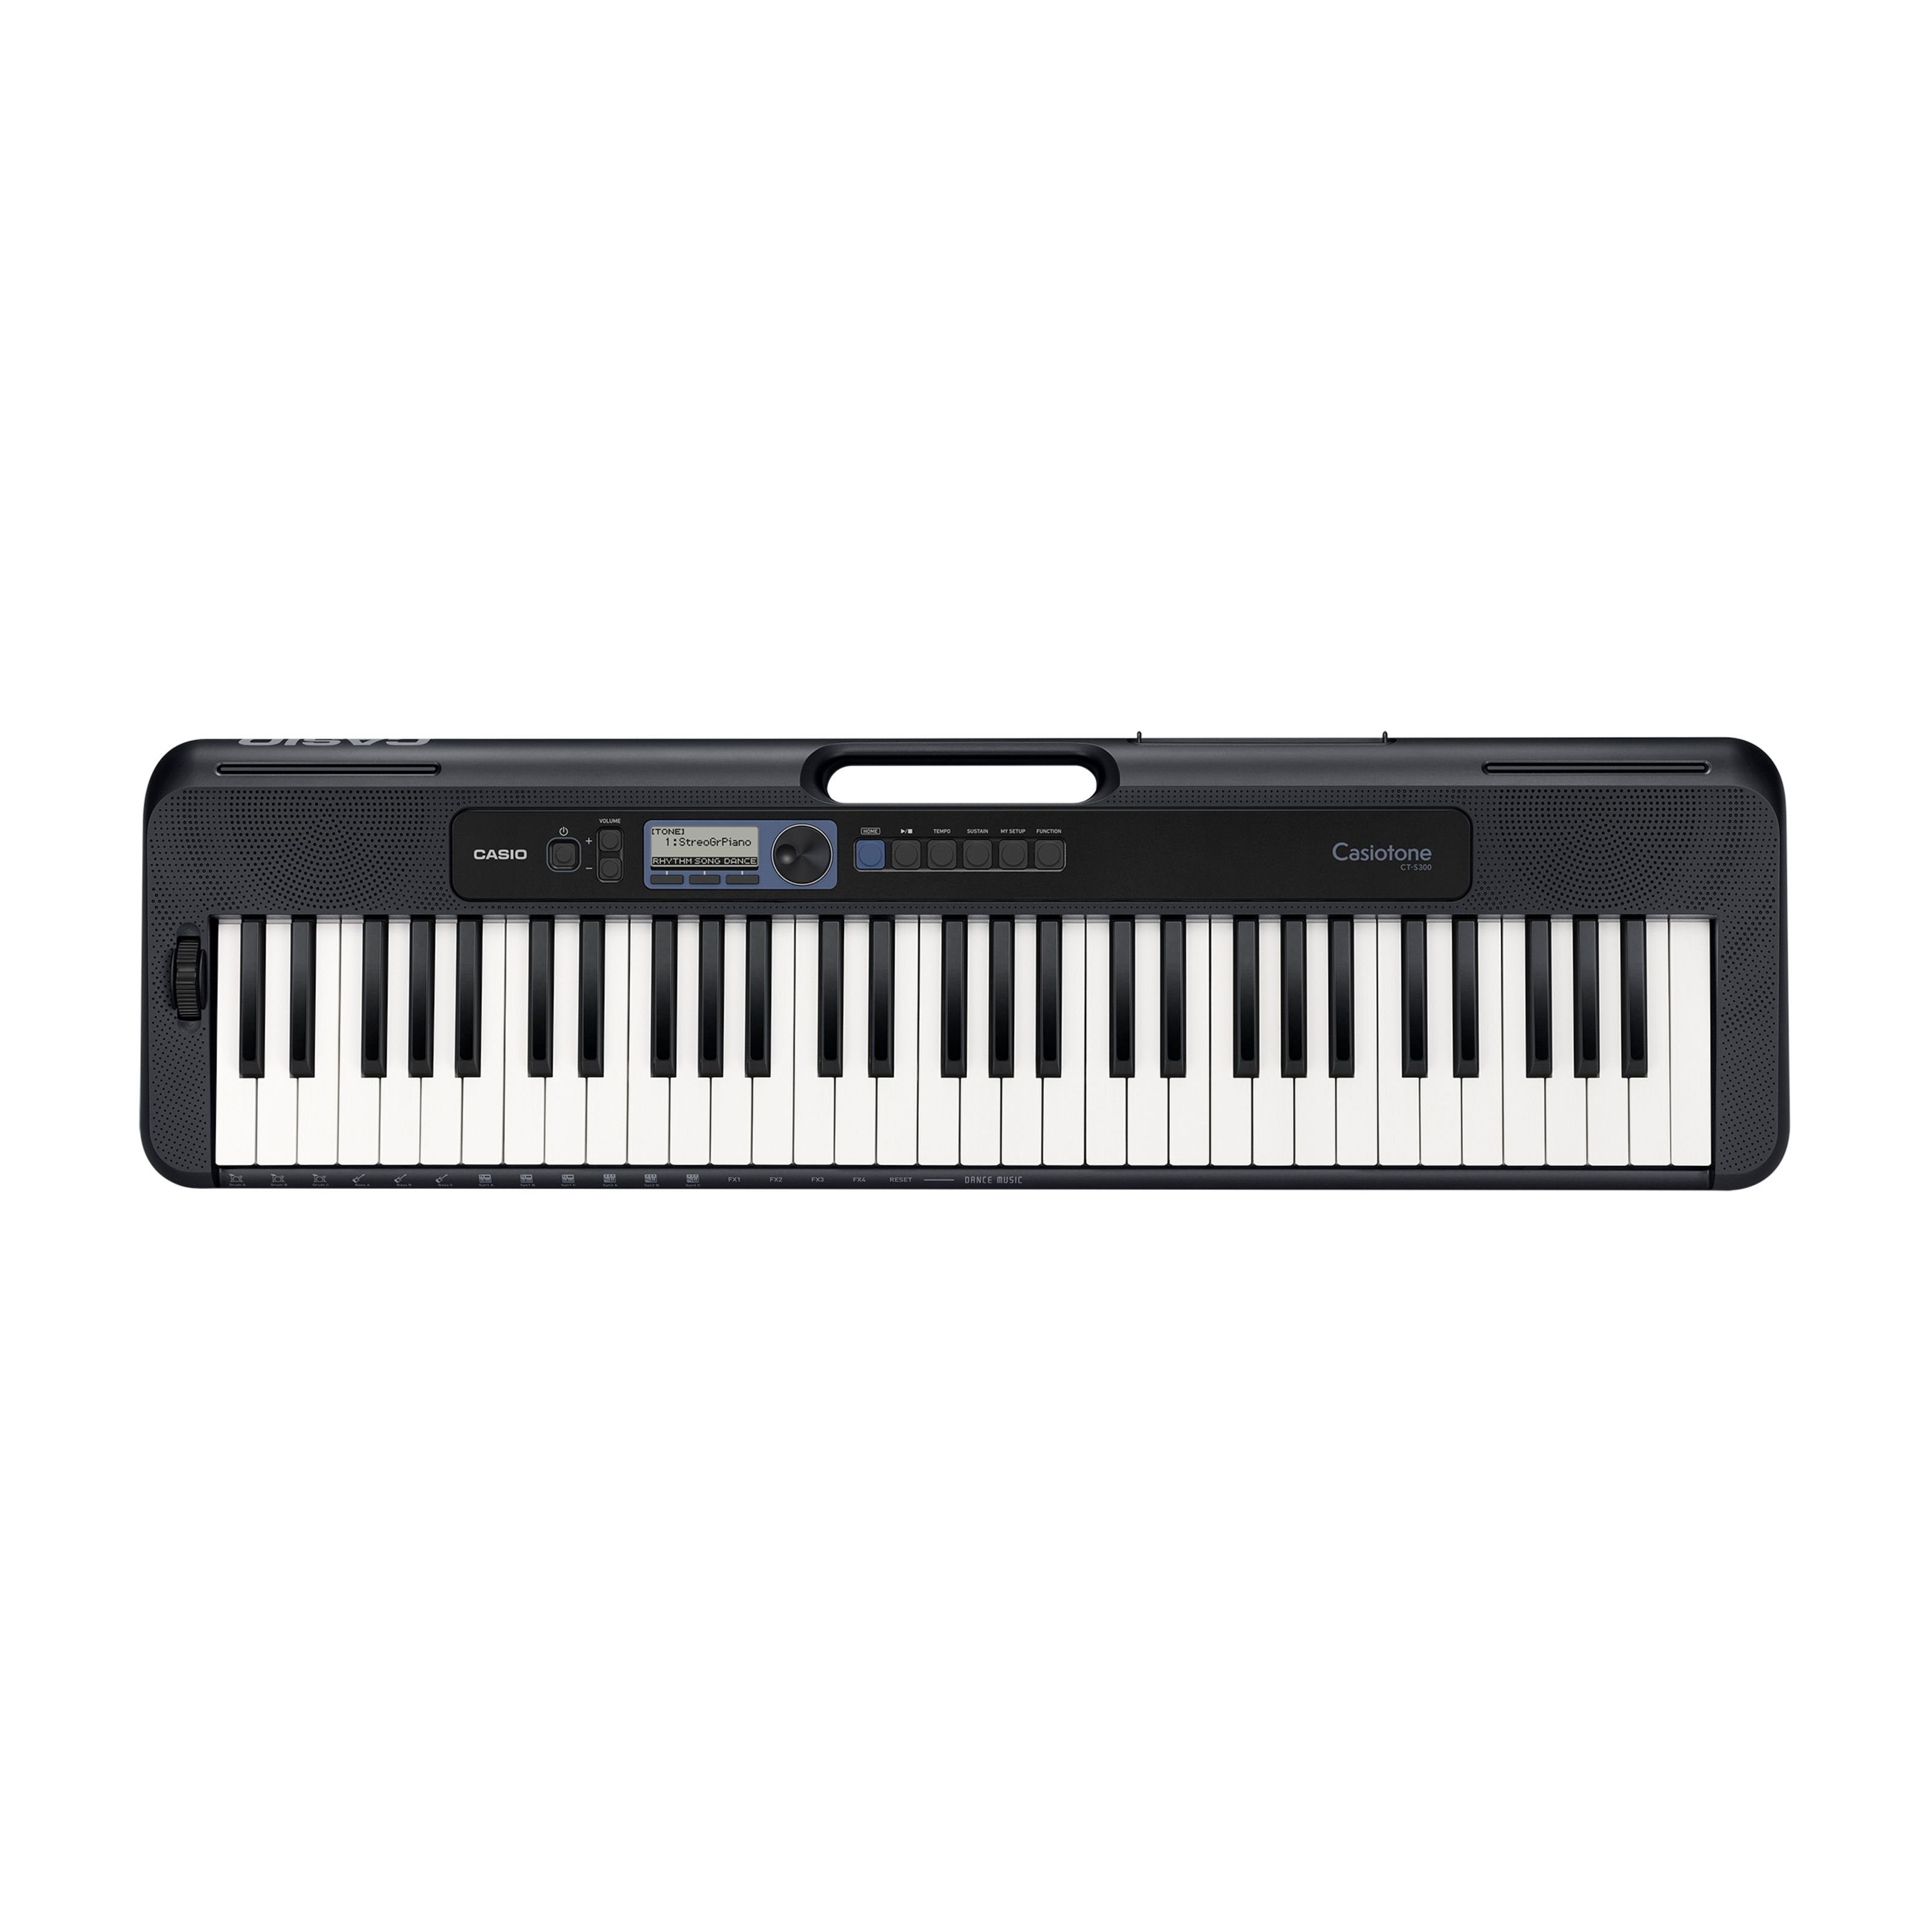 CASIO Home Keyboard, CT-S300